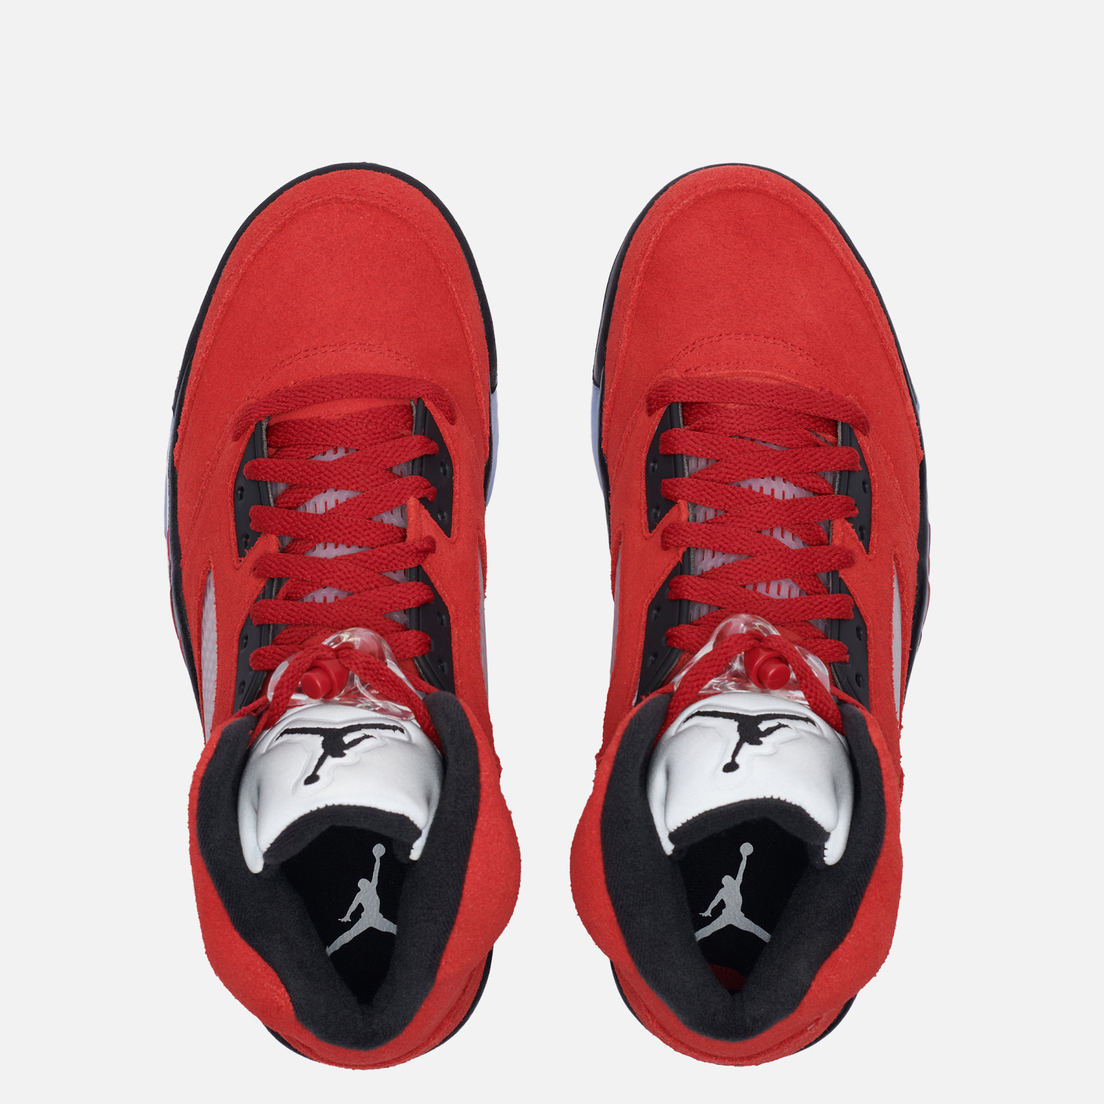 Jordan Мужские кроссовки Air Jordan 5 Retro Raging Bull Red